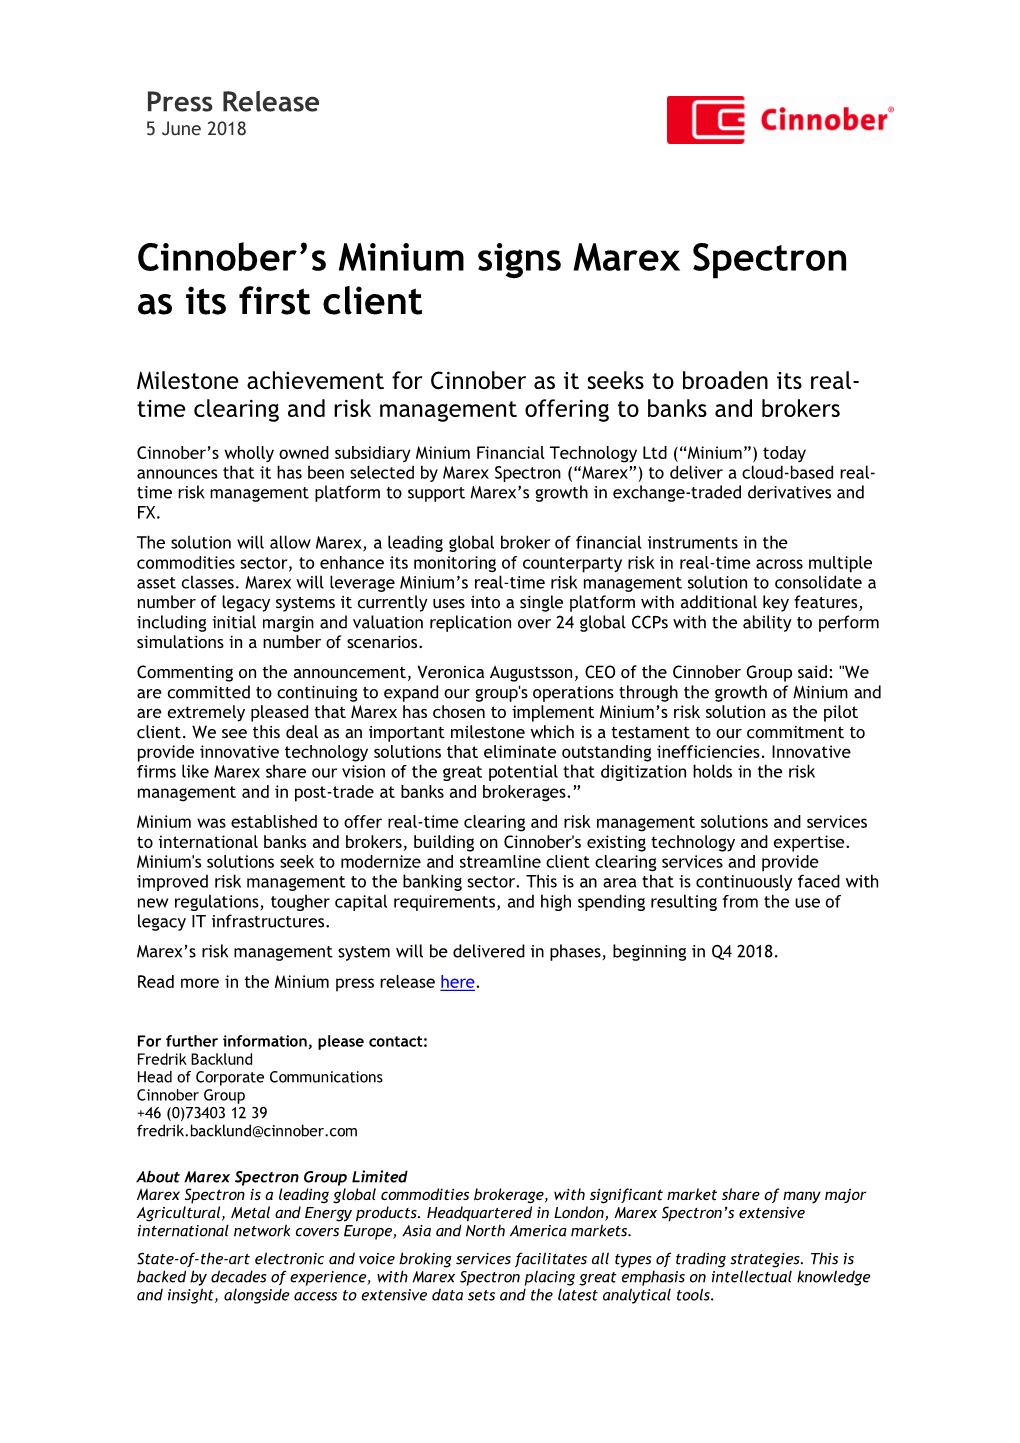 Cinnober's Minium Signs Marex Spectron As Its First Client